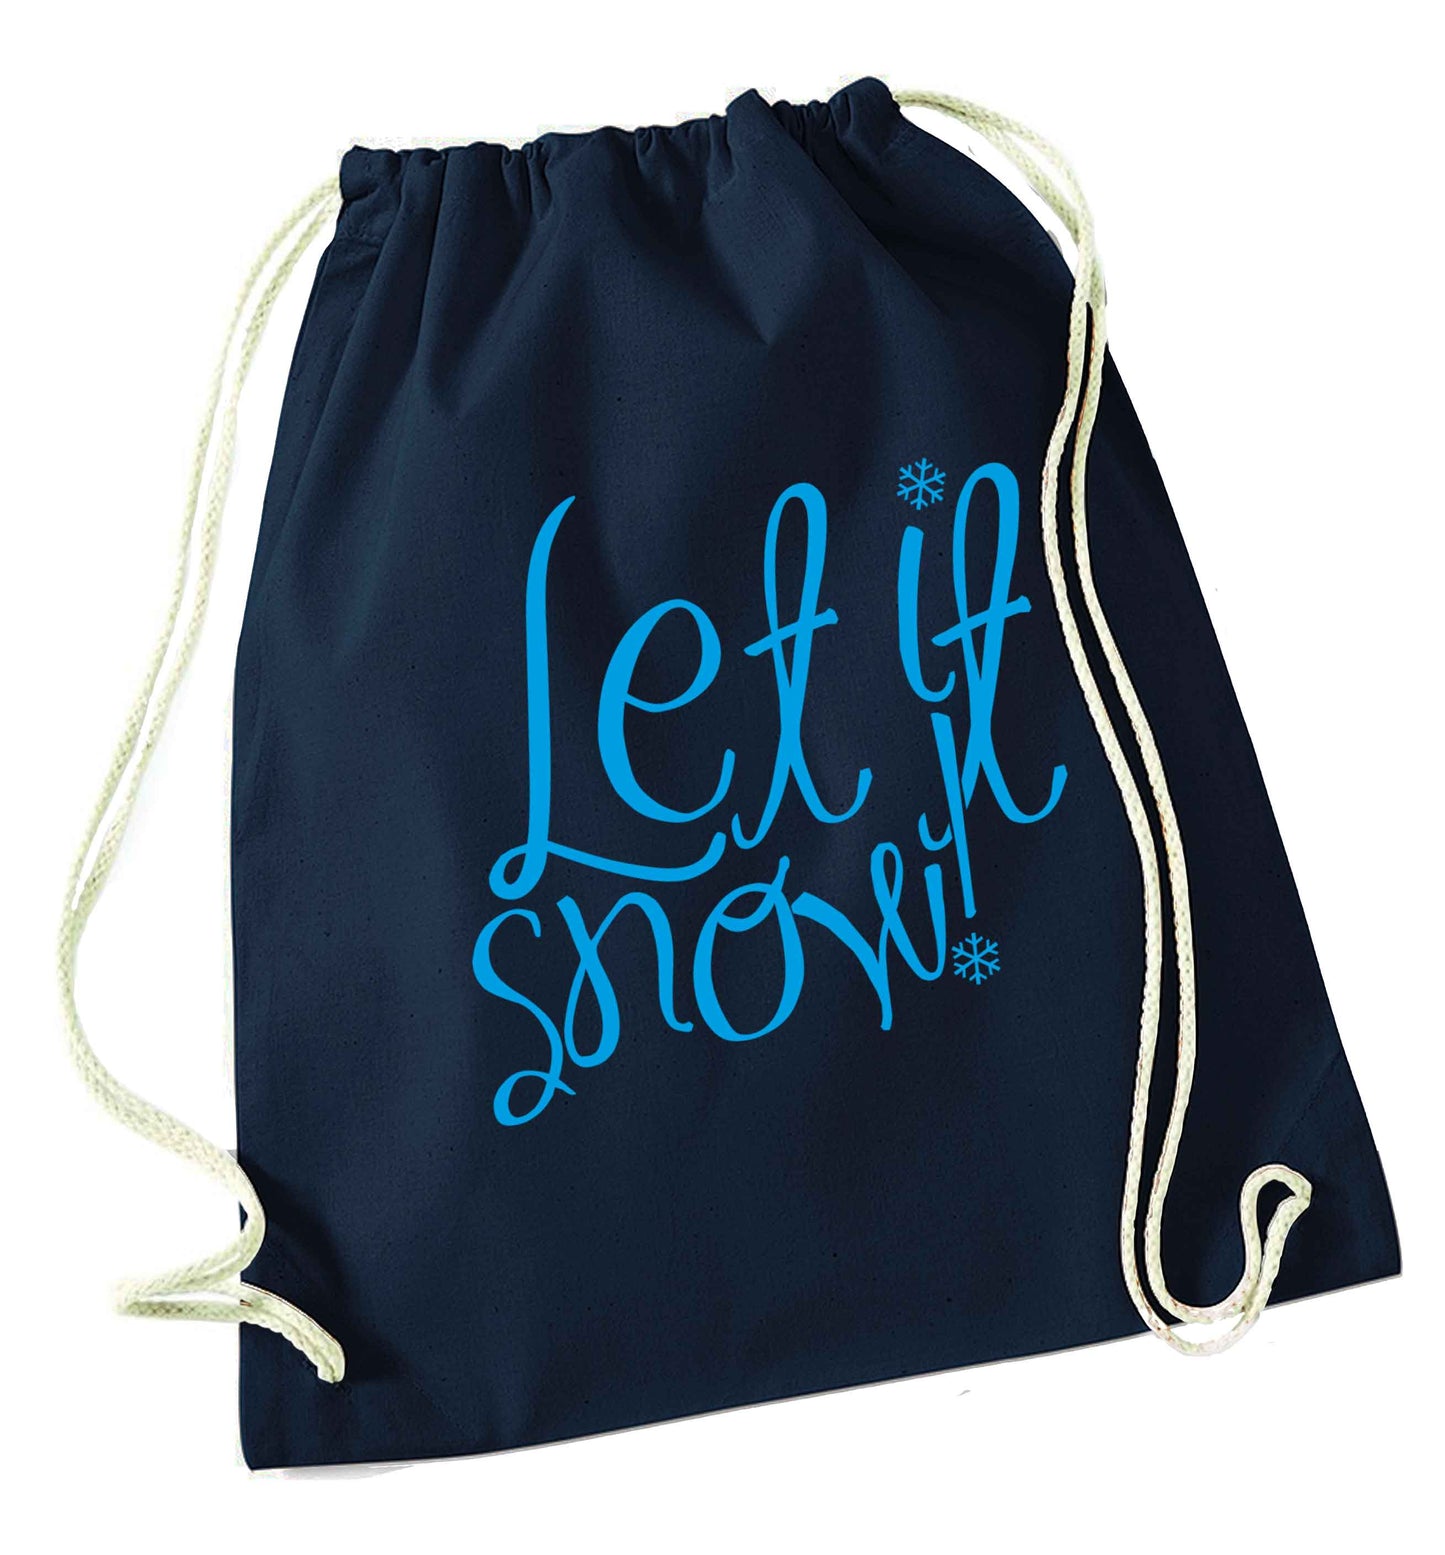 Let it snow navy drawstring bag